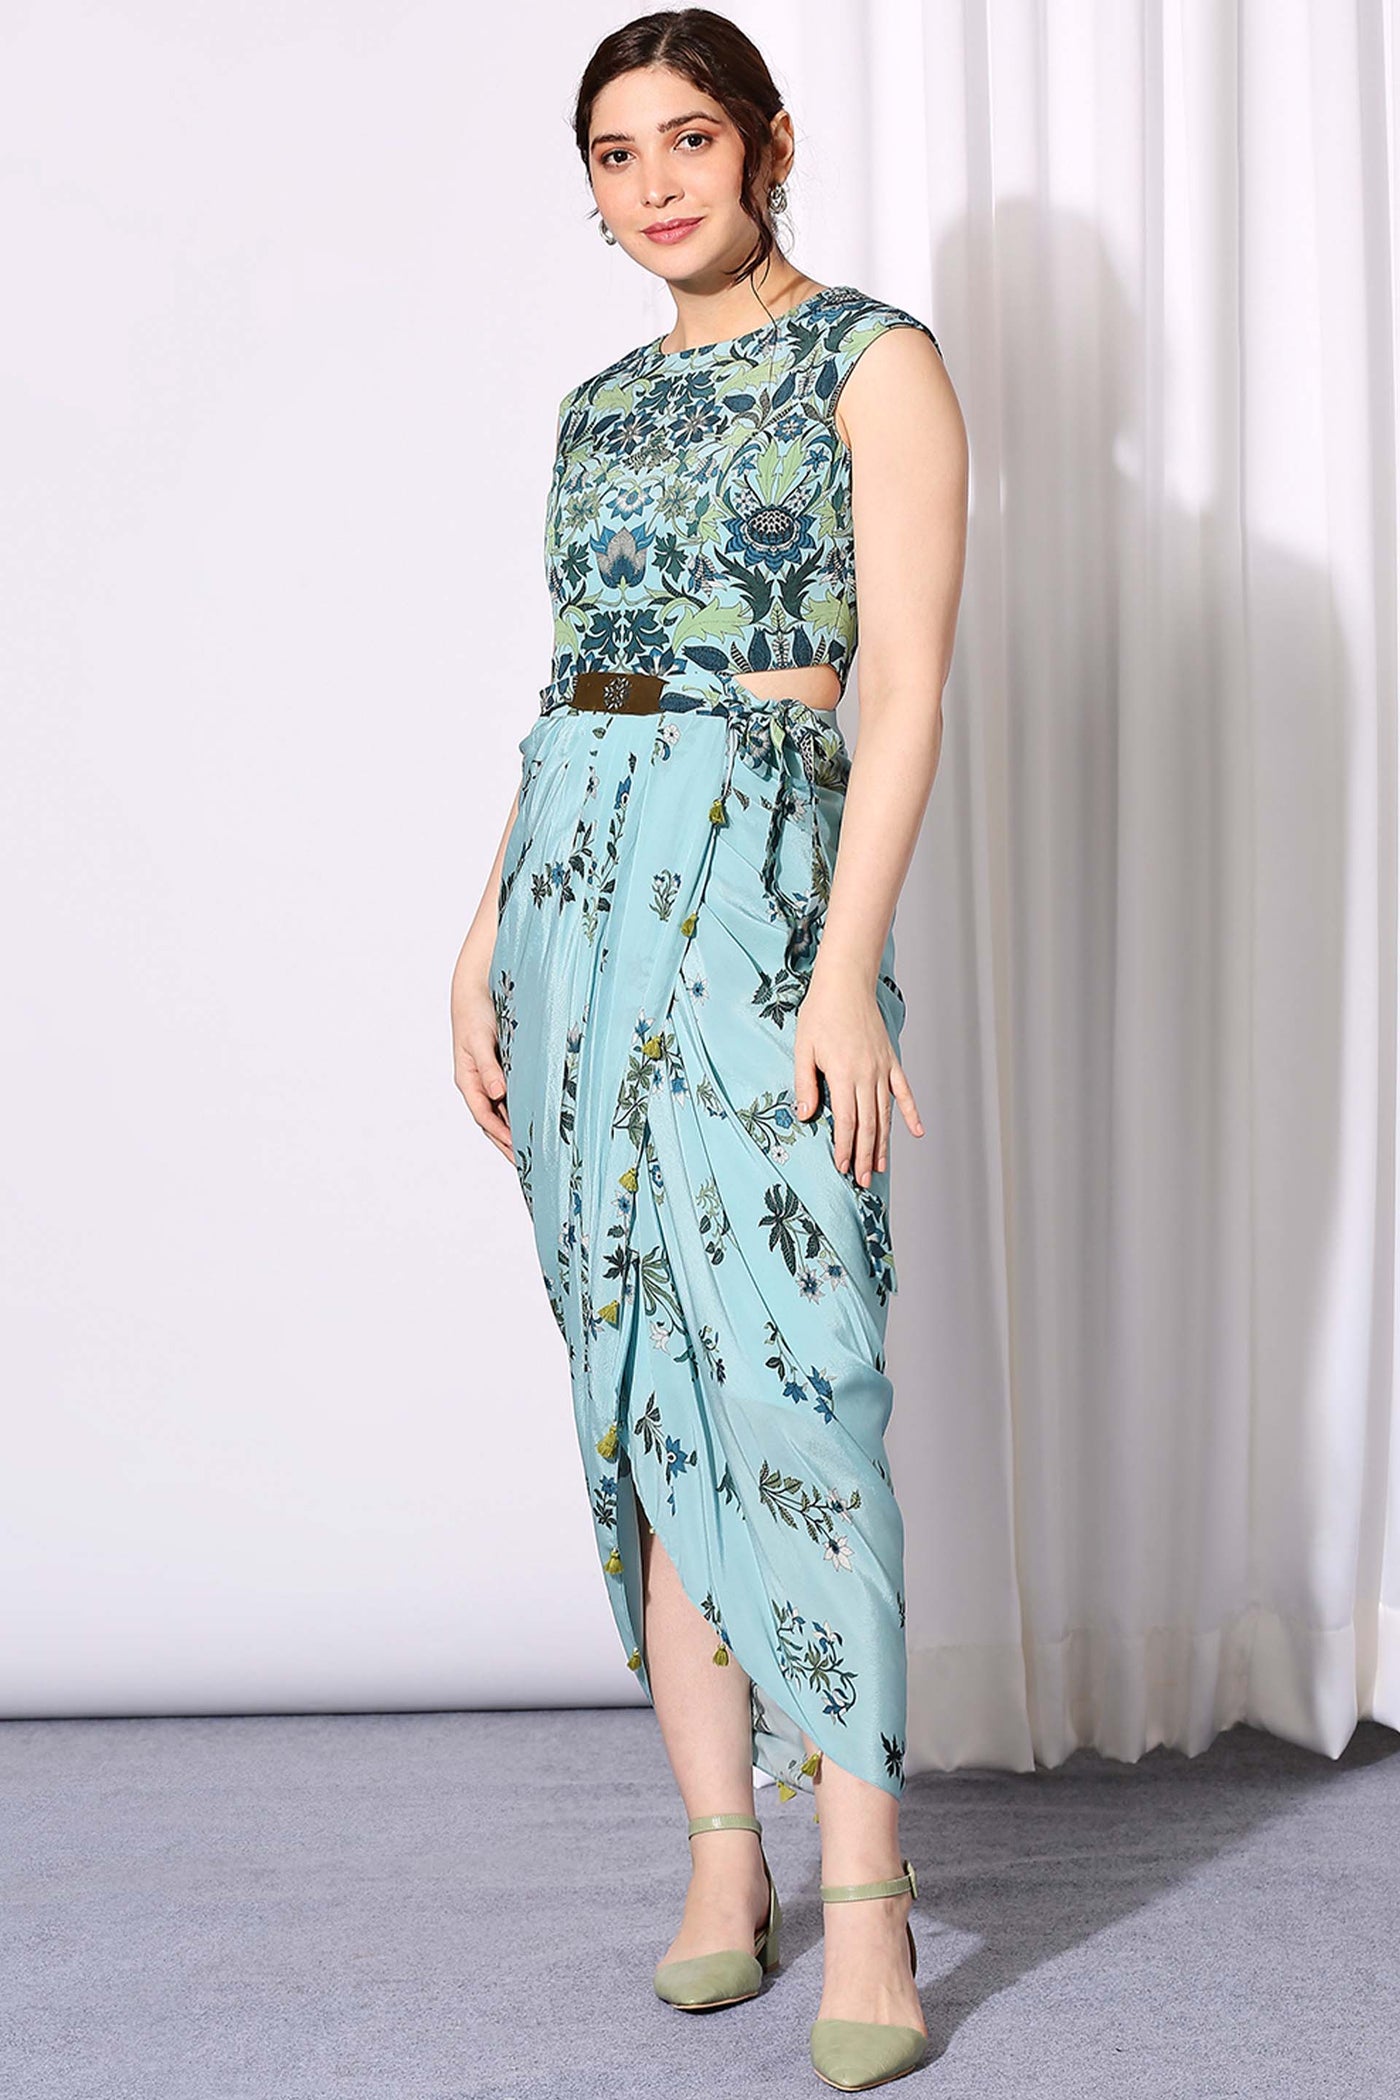 sougat paul Pastel Bloom Drape Dress With Cape blue fusion indian designer wear online shopping melange singapore